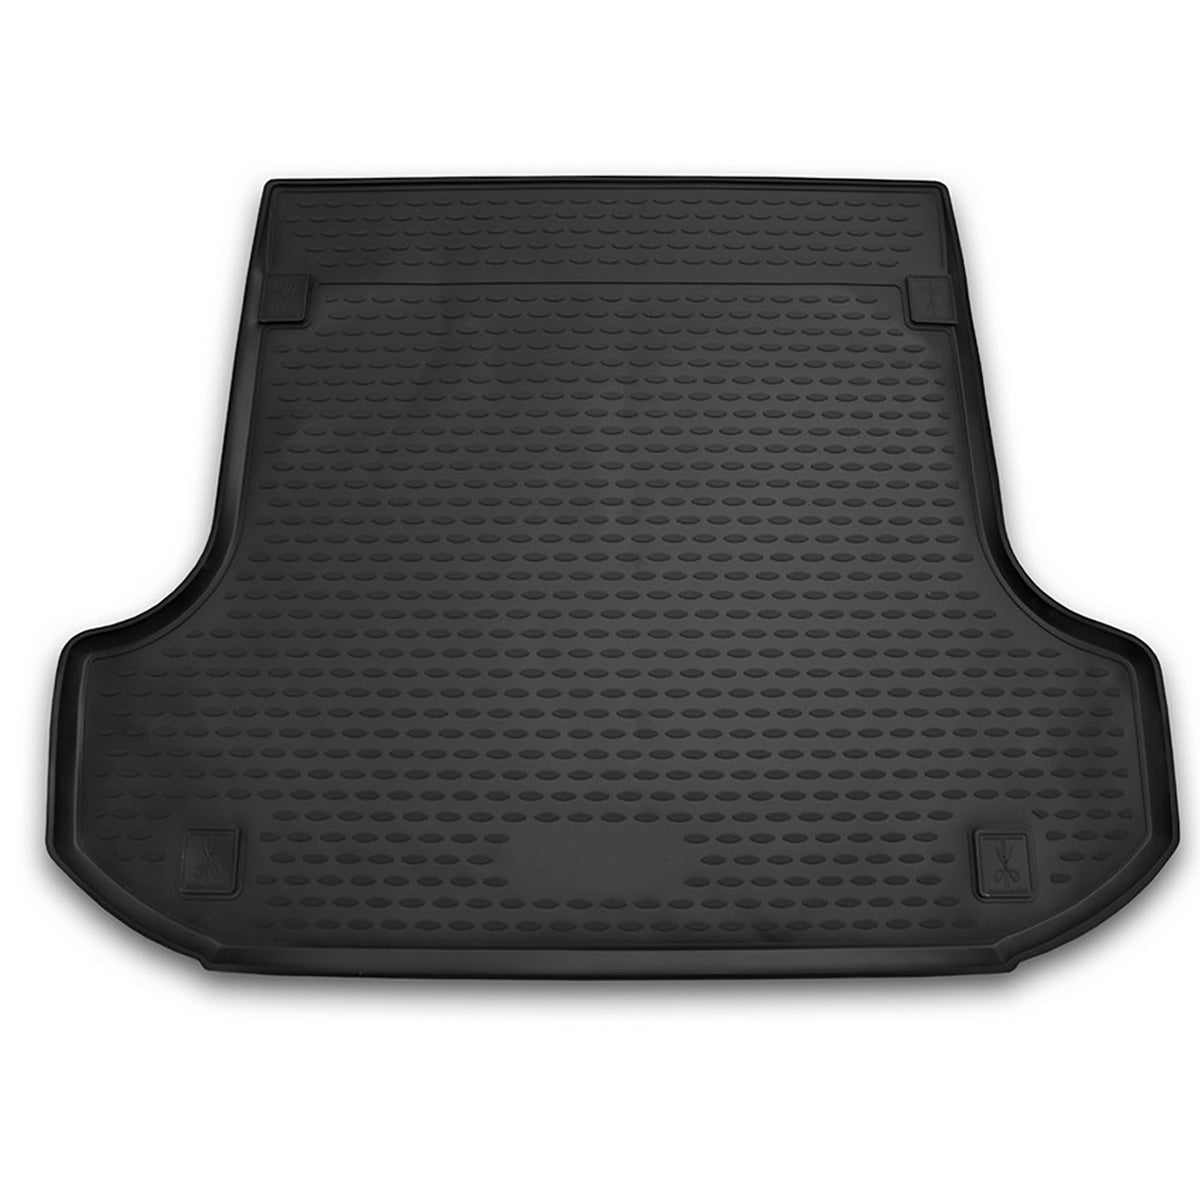 Boot mat boot liner for Dacia Logan MCV 2012-2020 rubber TPE black